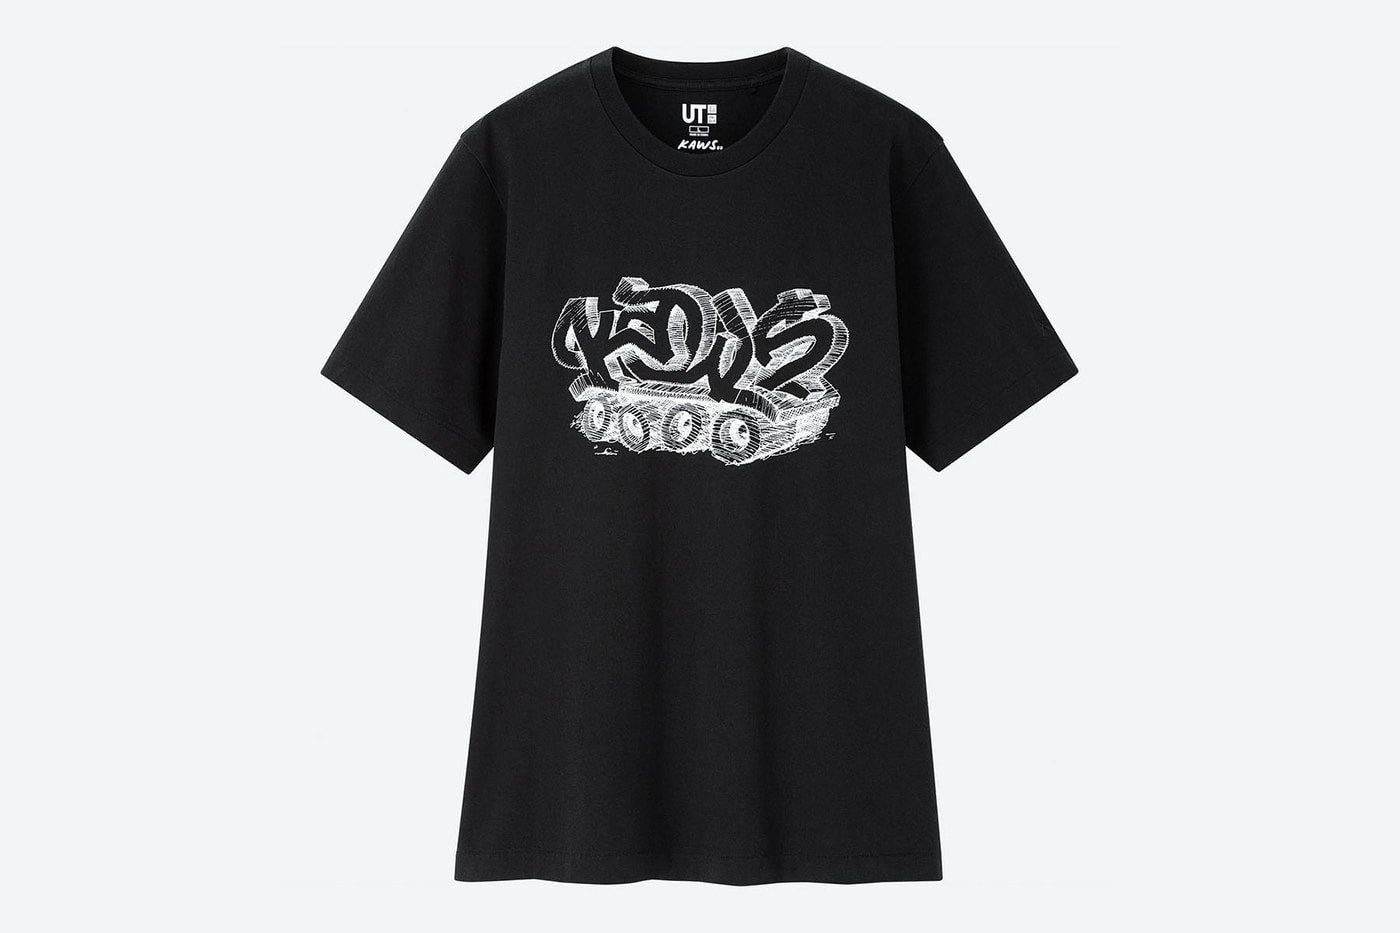 UNIQLO UT KAWS SUMMER Re-Release Announcement T shirt Date info Where Buy location